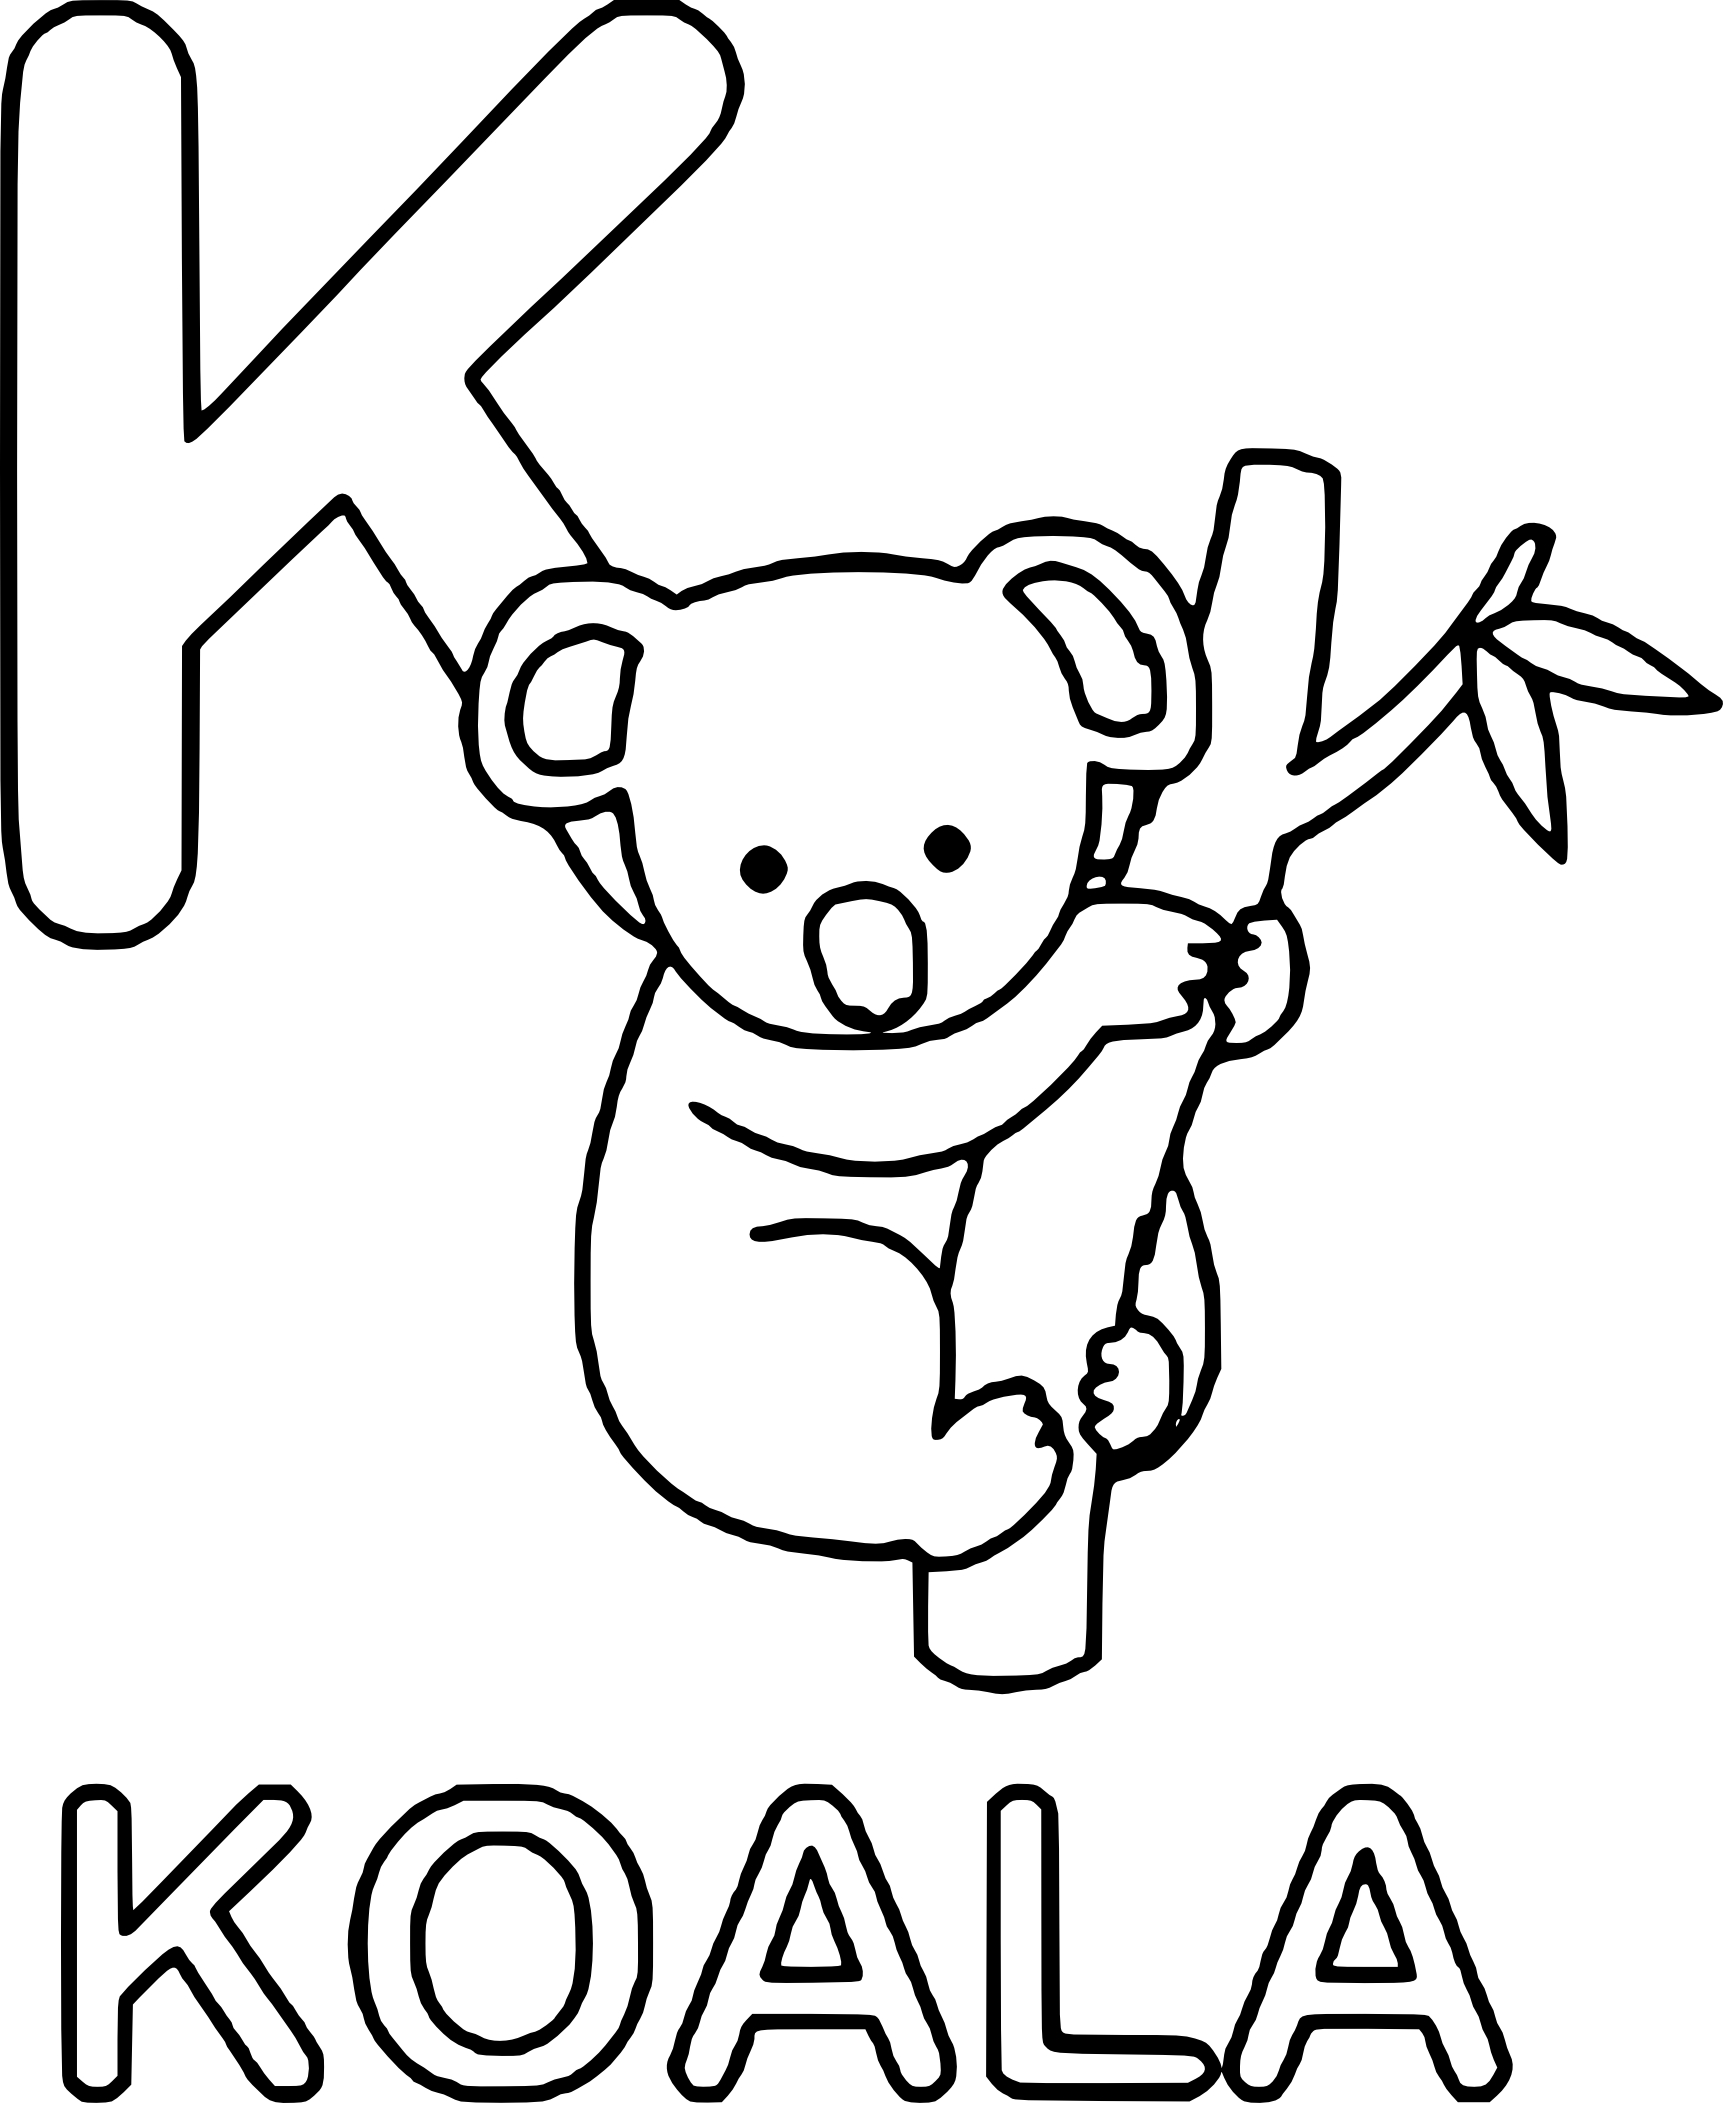 Koala Alphabet coloring page